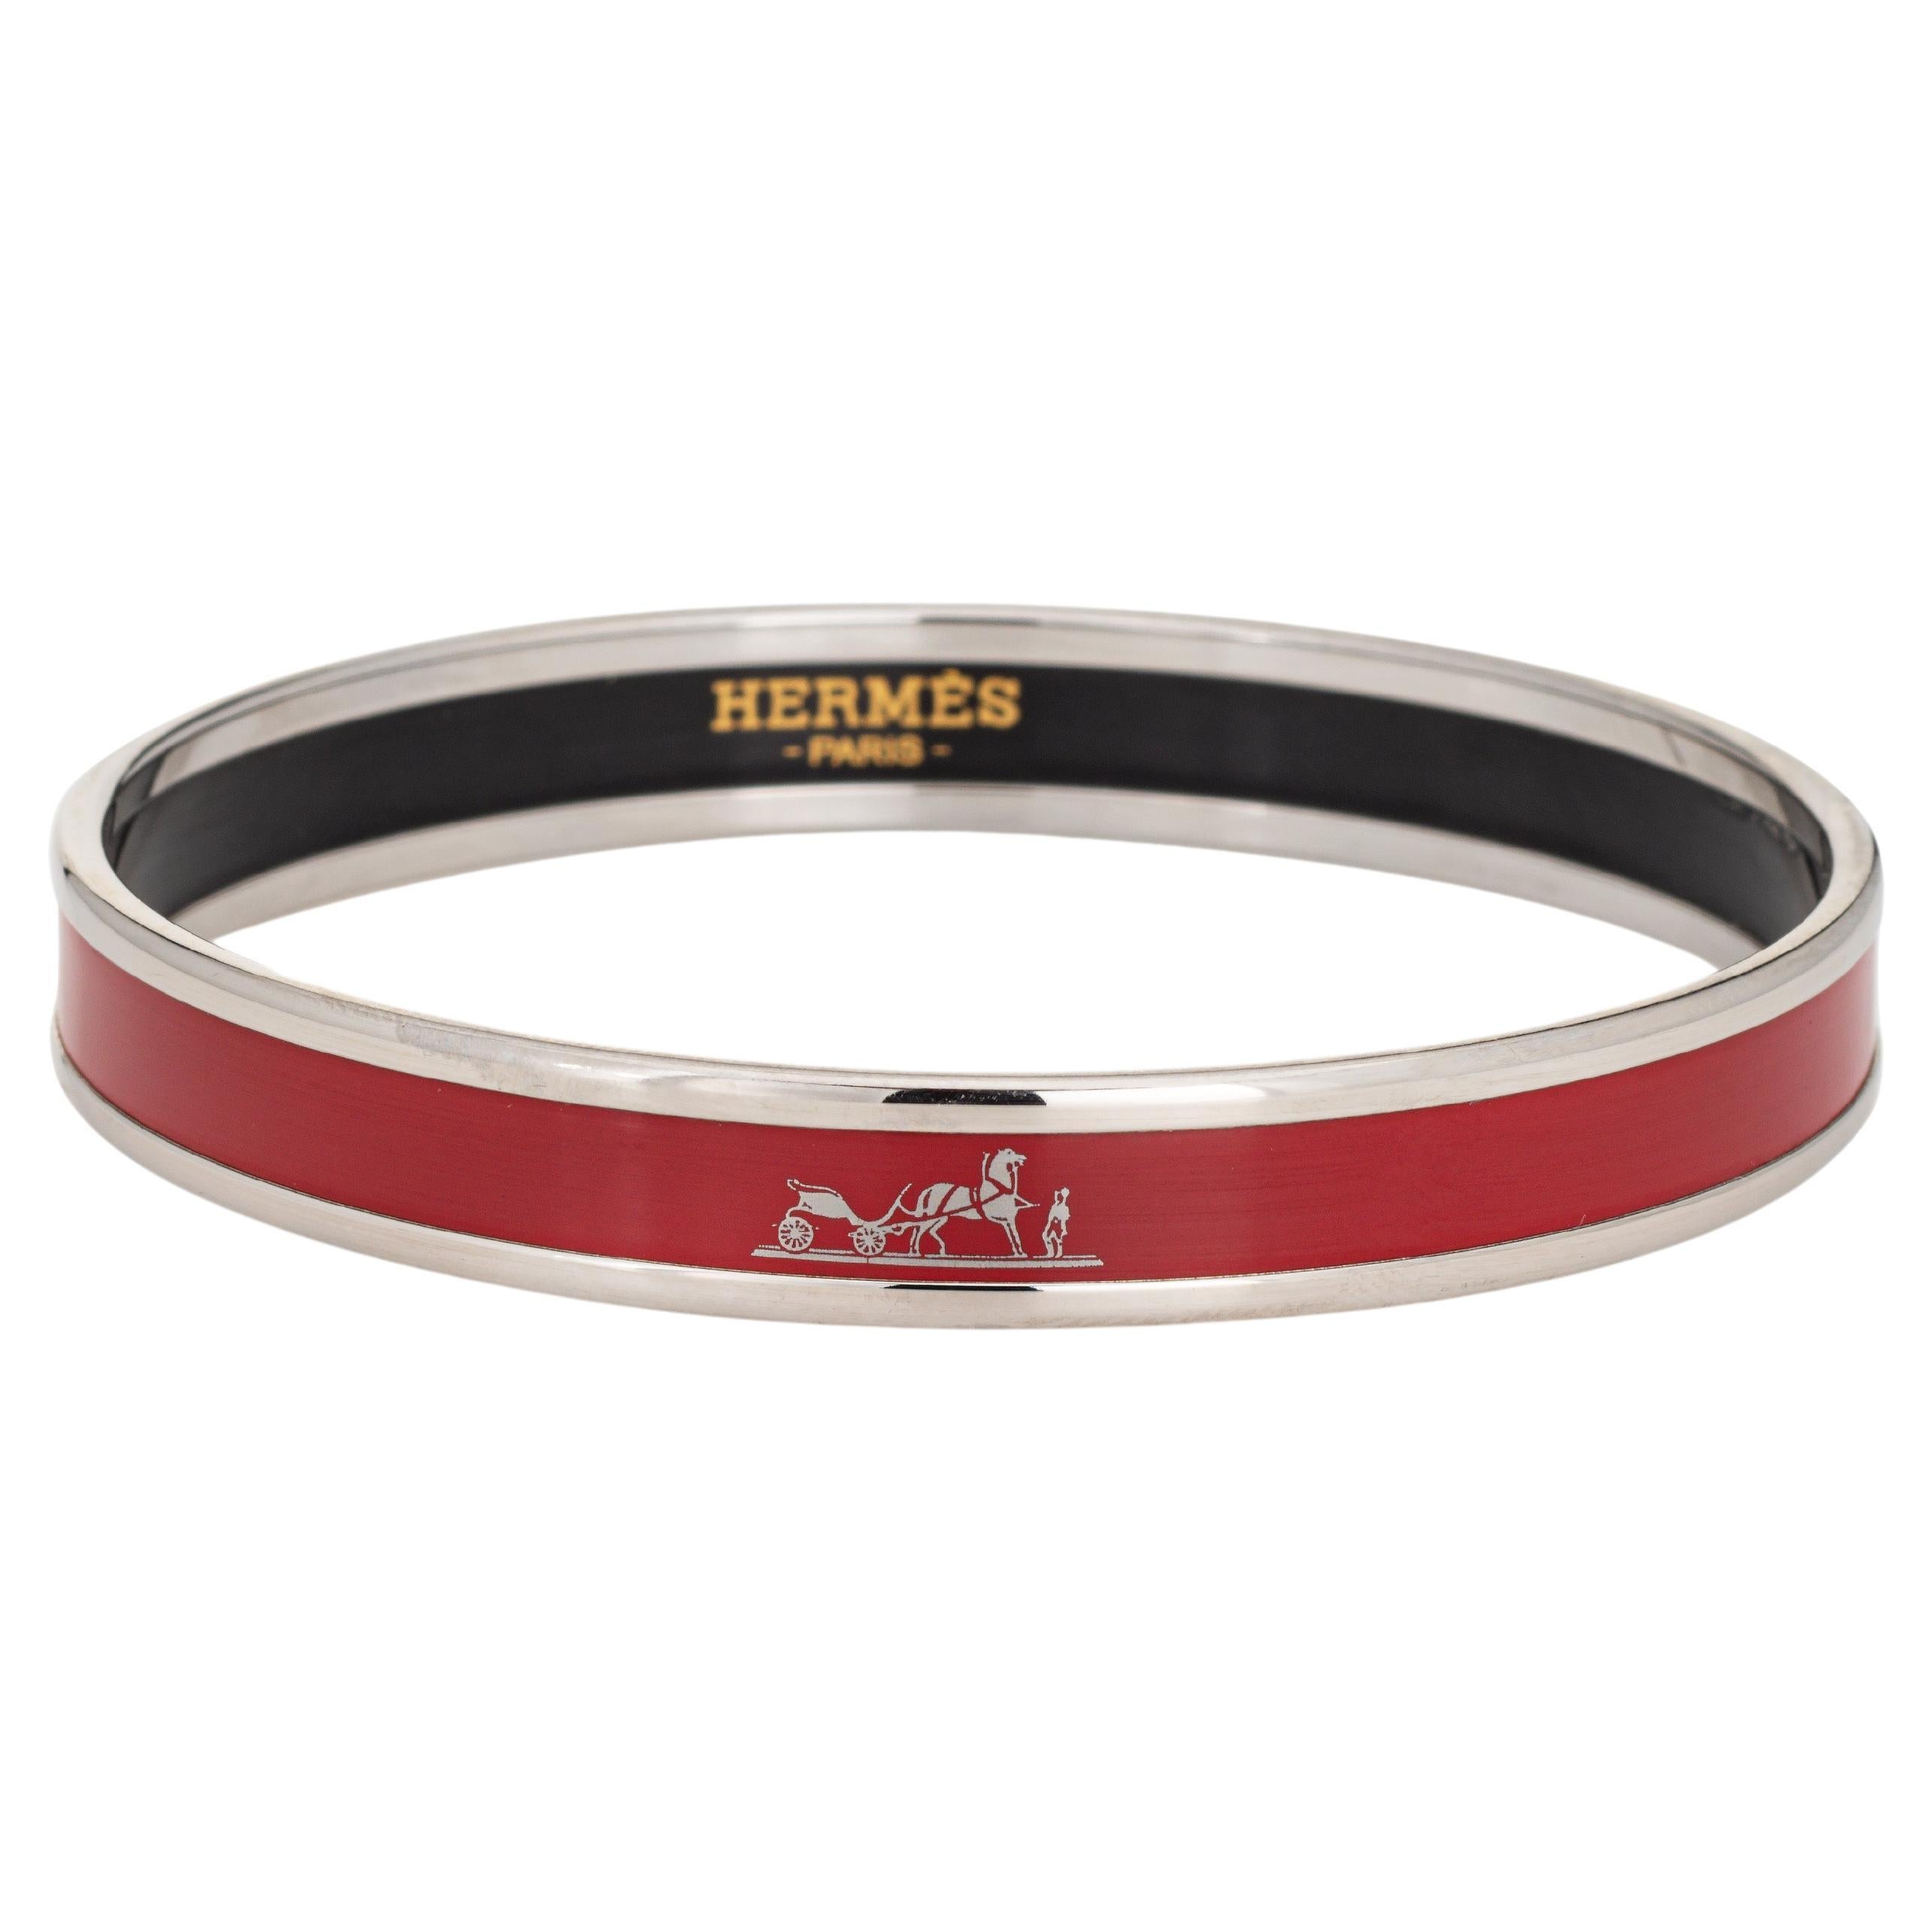 Hermes Rot Emaille Armreif Armband Pferdekutsche Motiv Narrow 65 Größe klein im Angebot